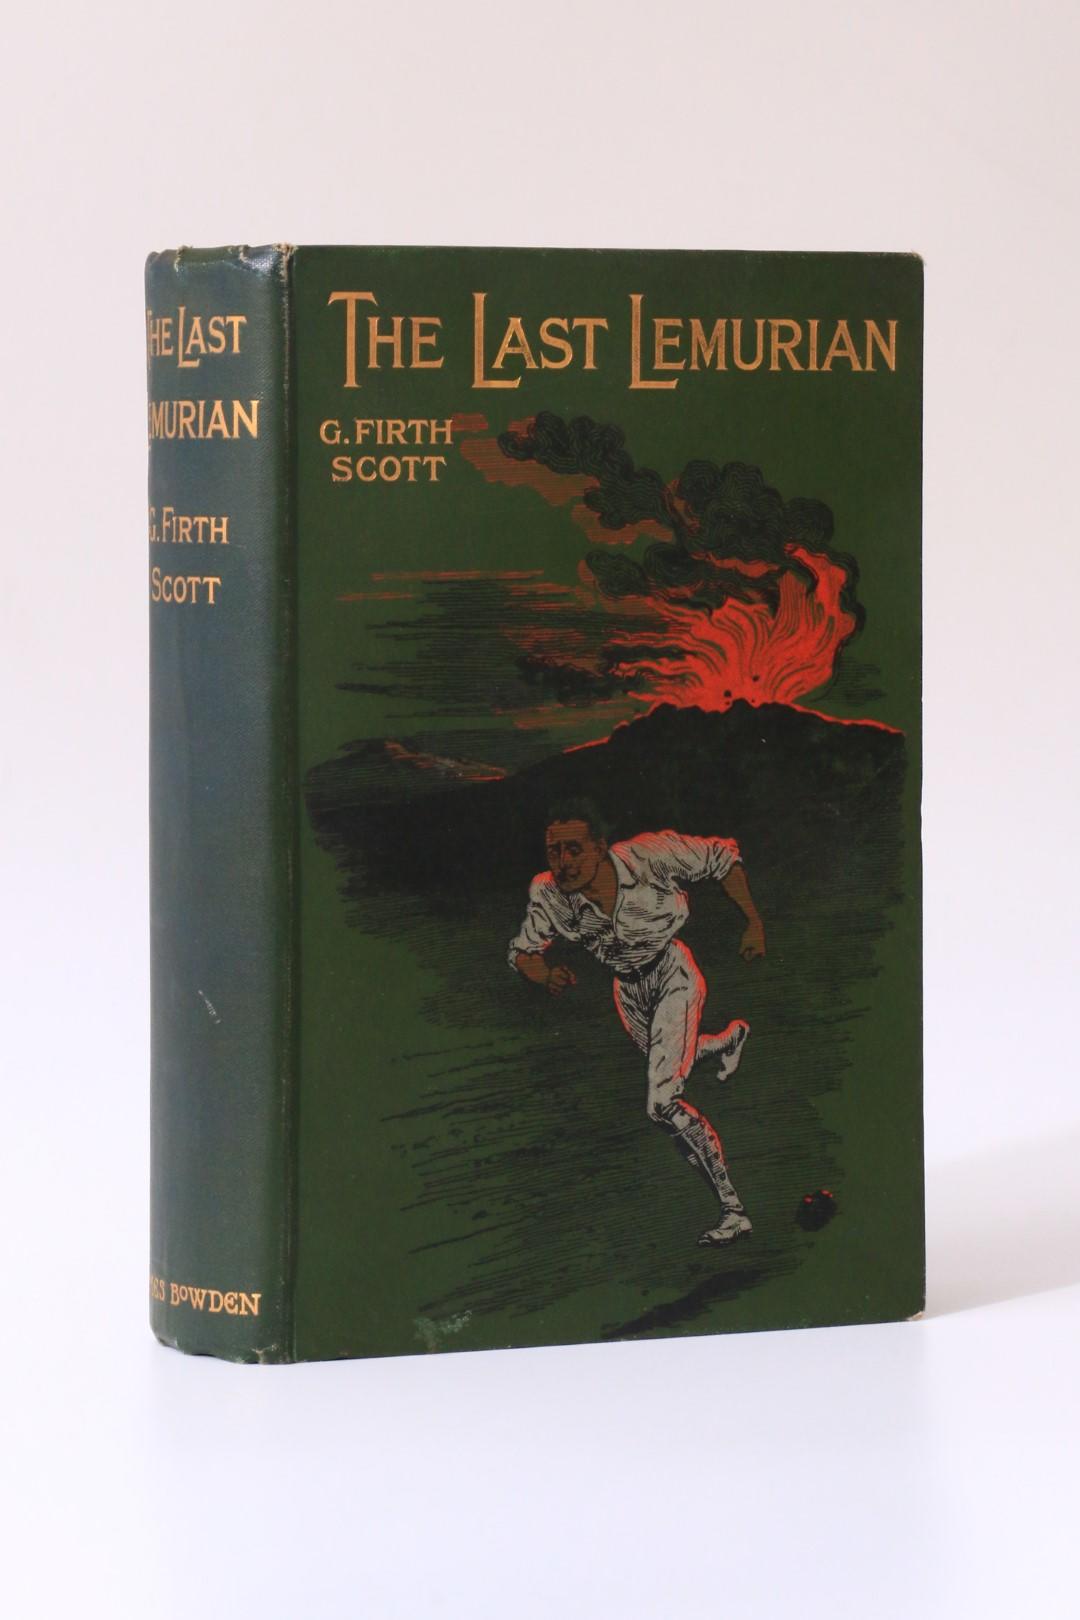 G. Firth Scott - The Last Lemurian: A Westralian Romance - James Bowden, 1898, First Edition.